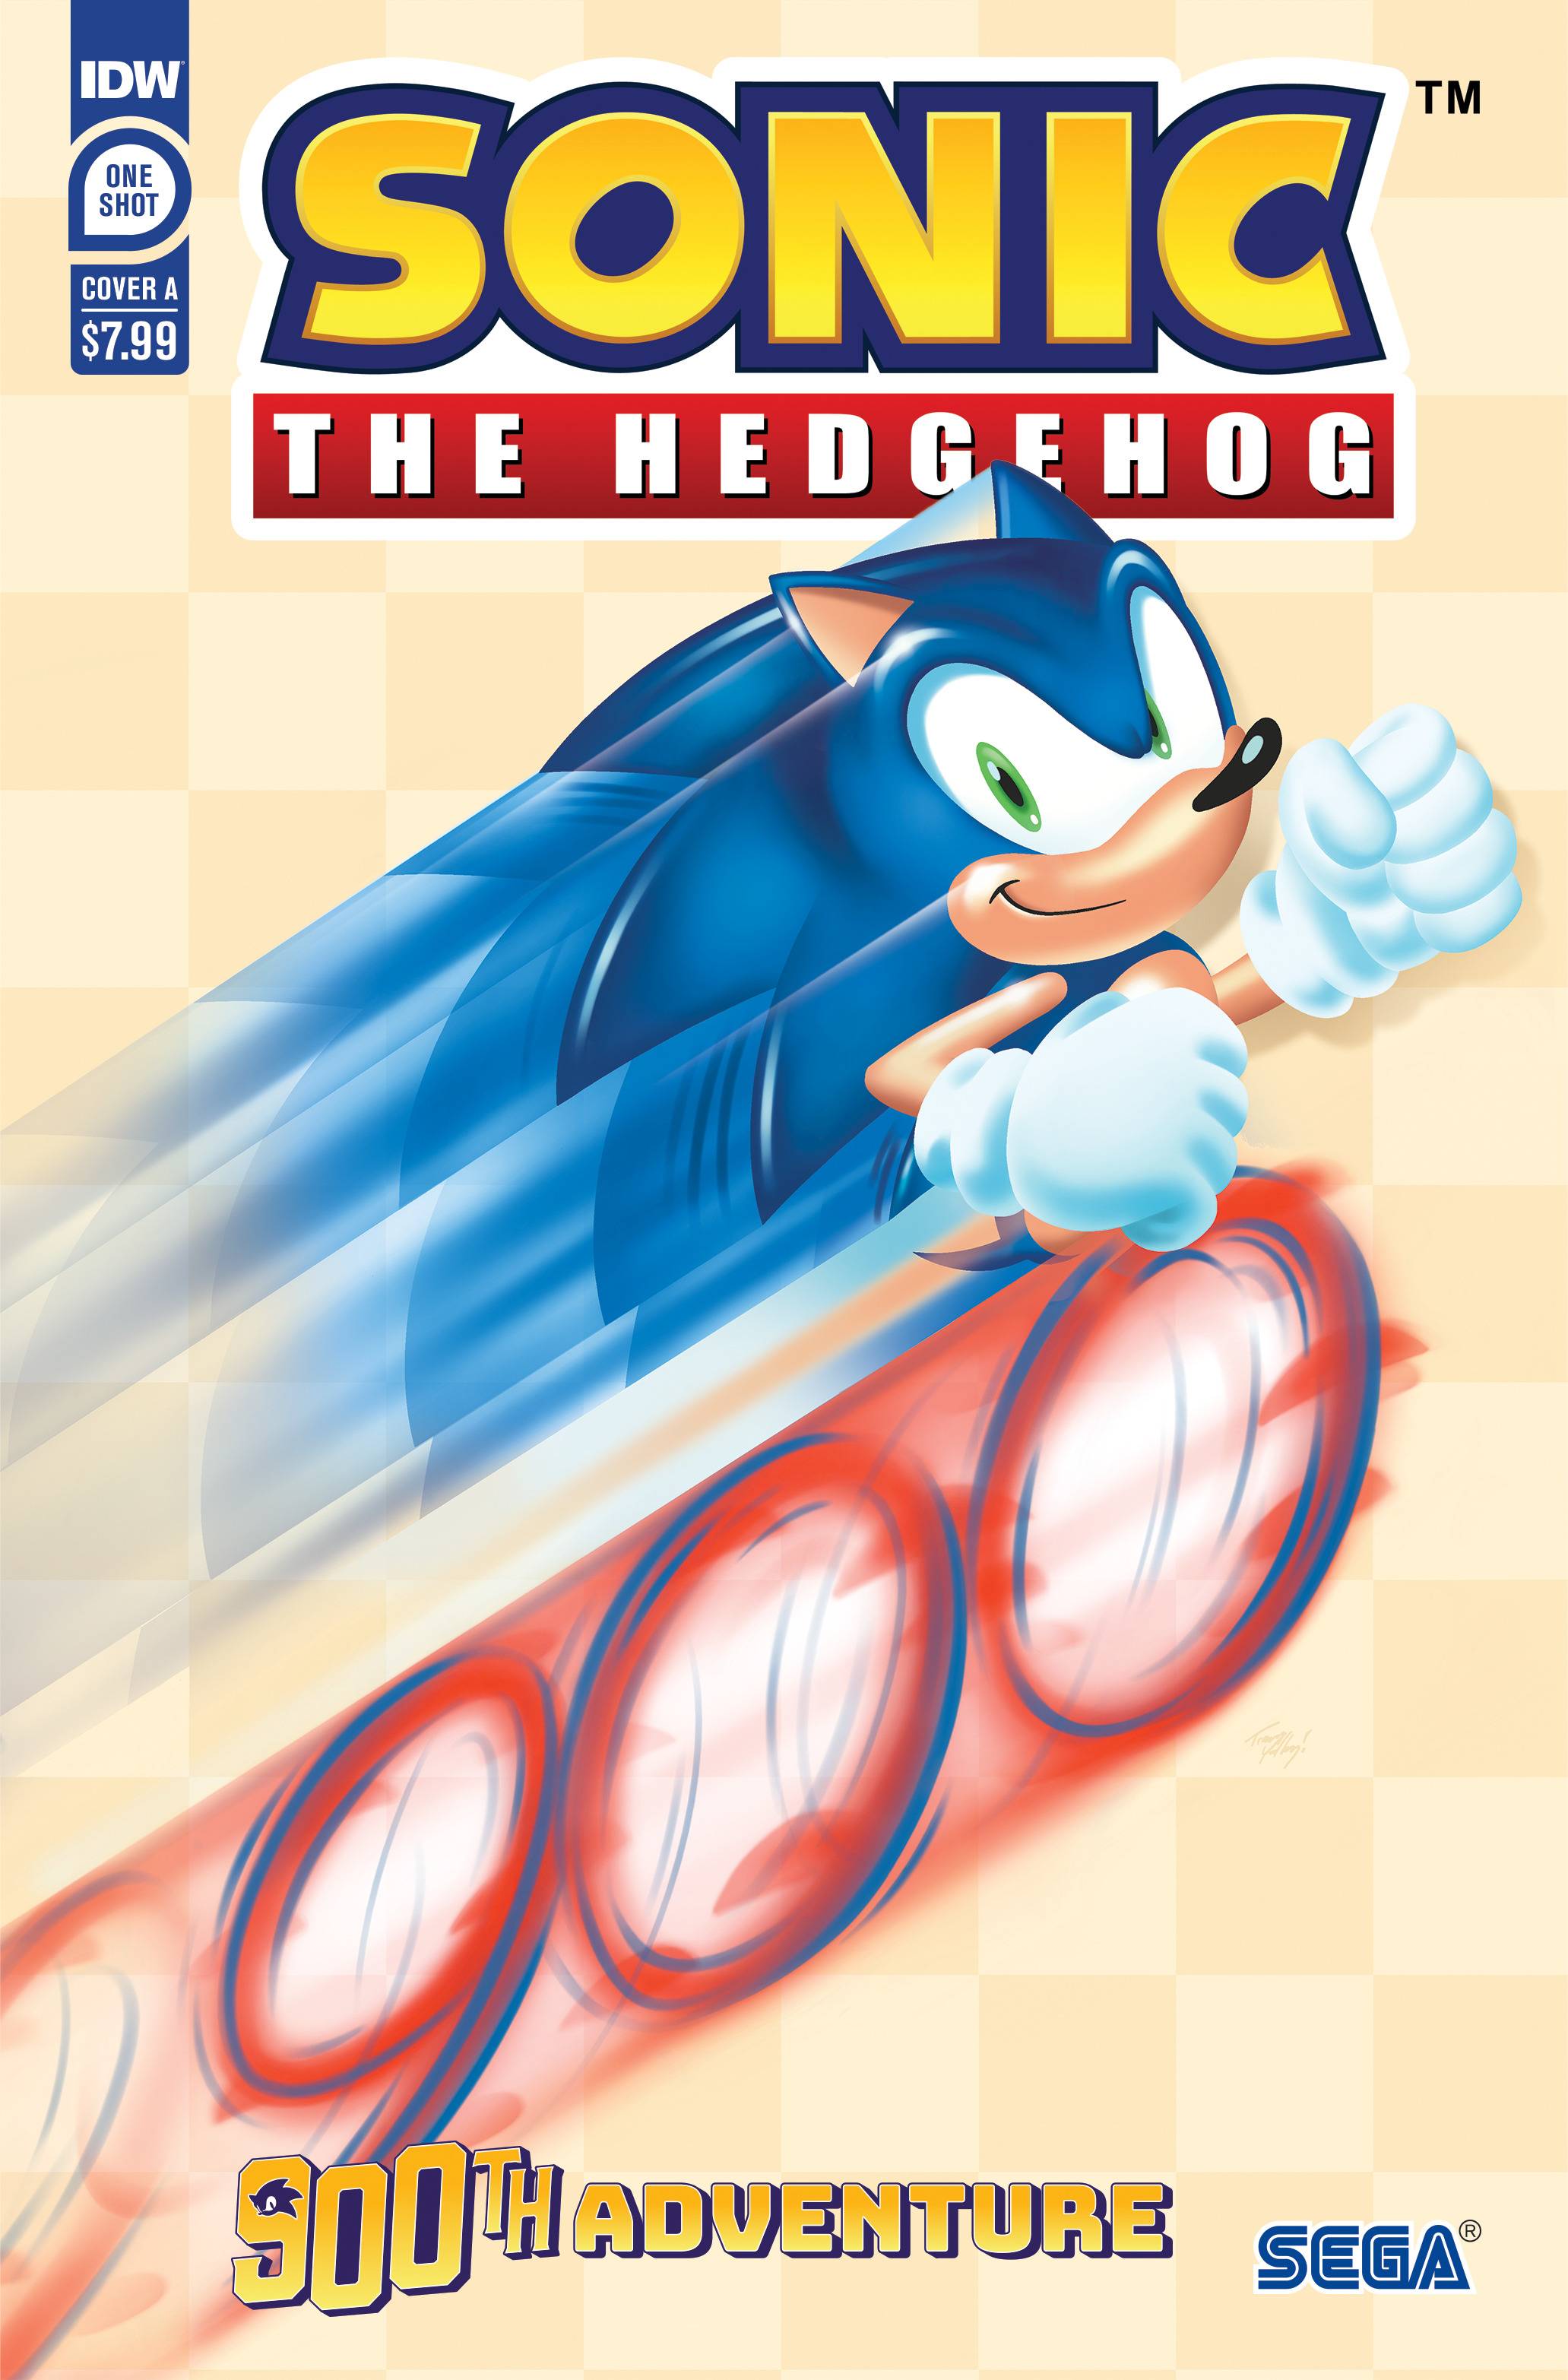 Sonic idw 900th adventure